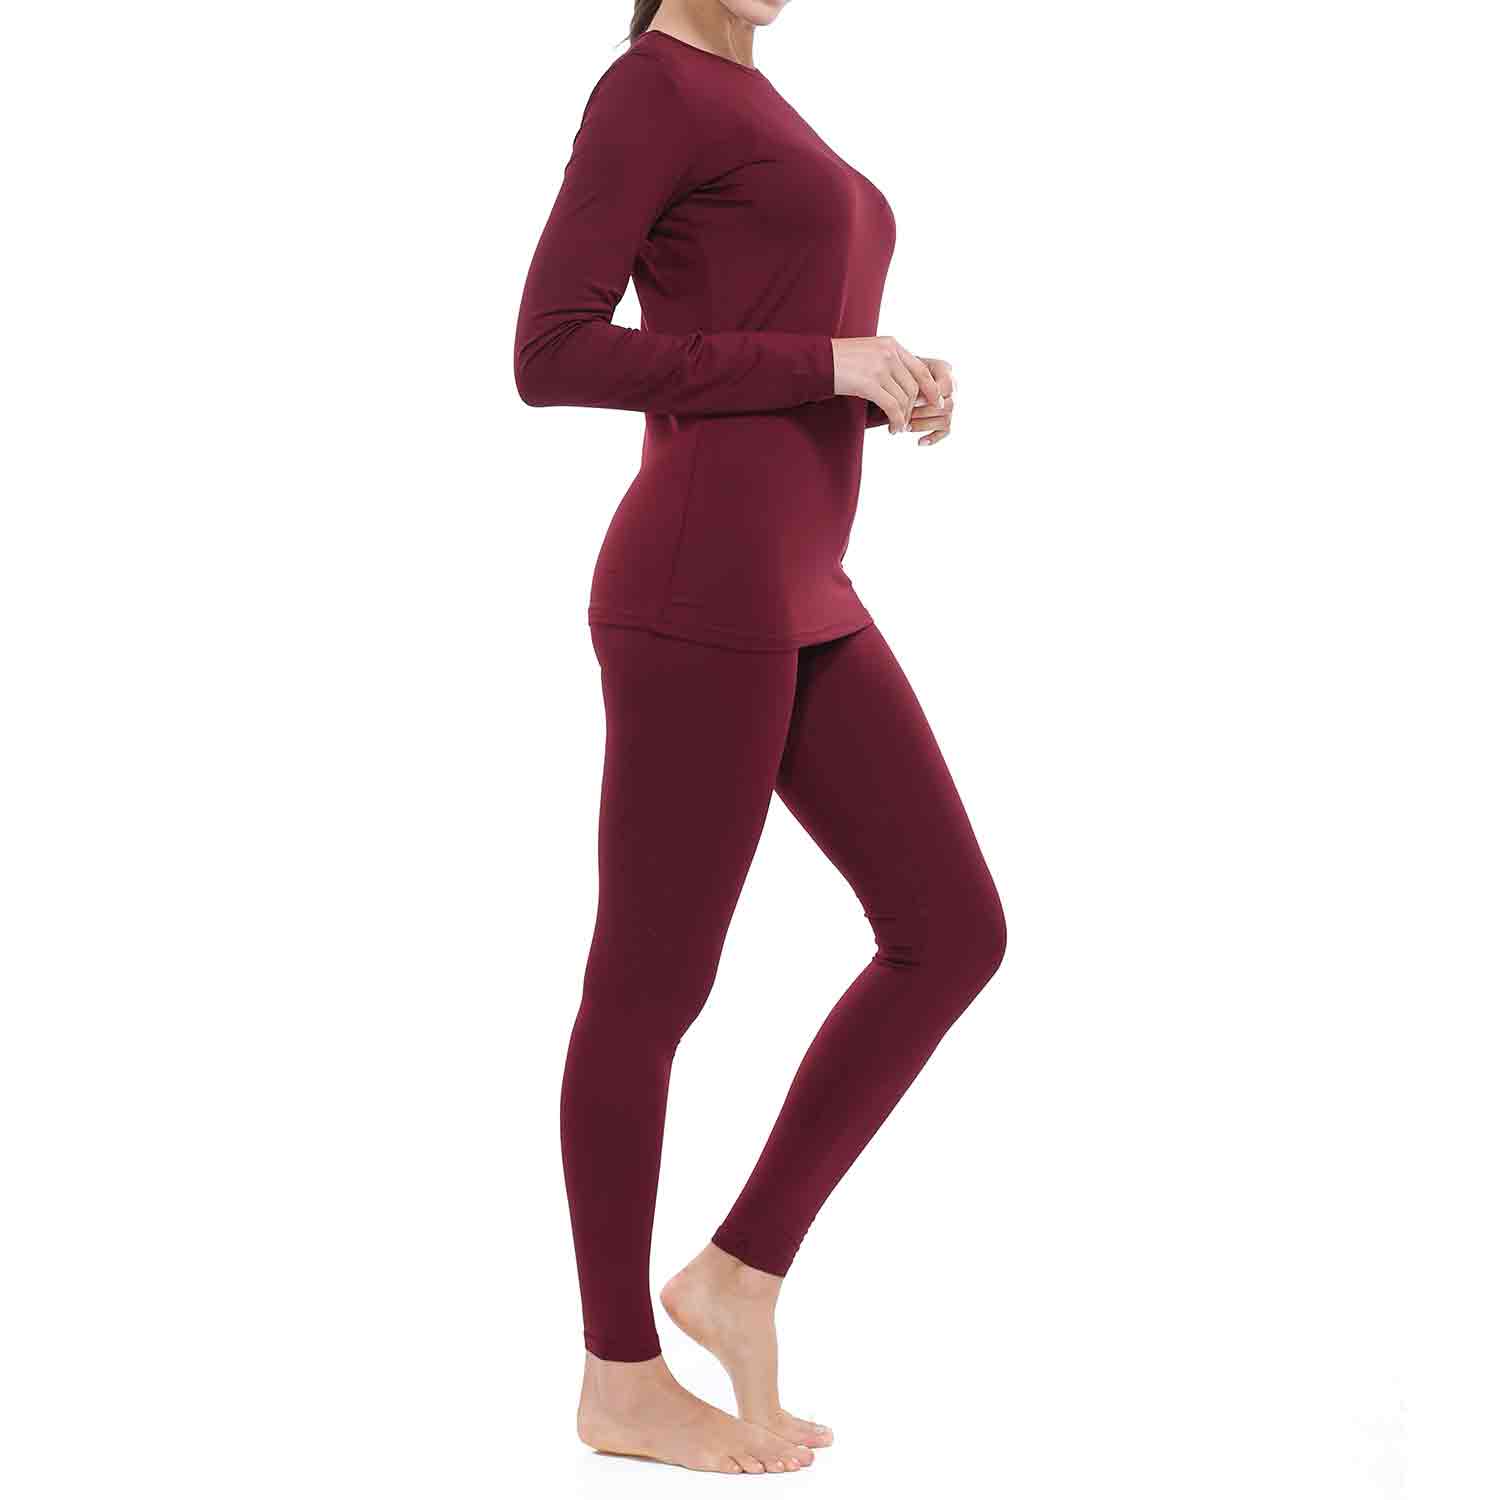 AUQCO Thermal Underwear for Women Ultra Soft Long John Set with Fleece Lined